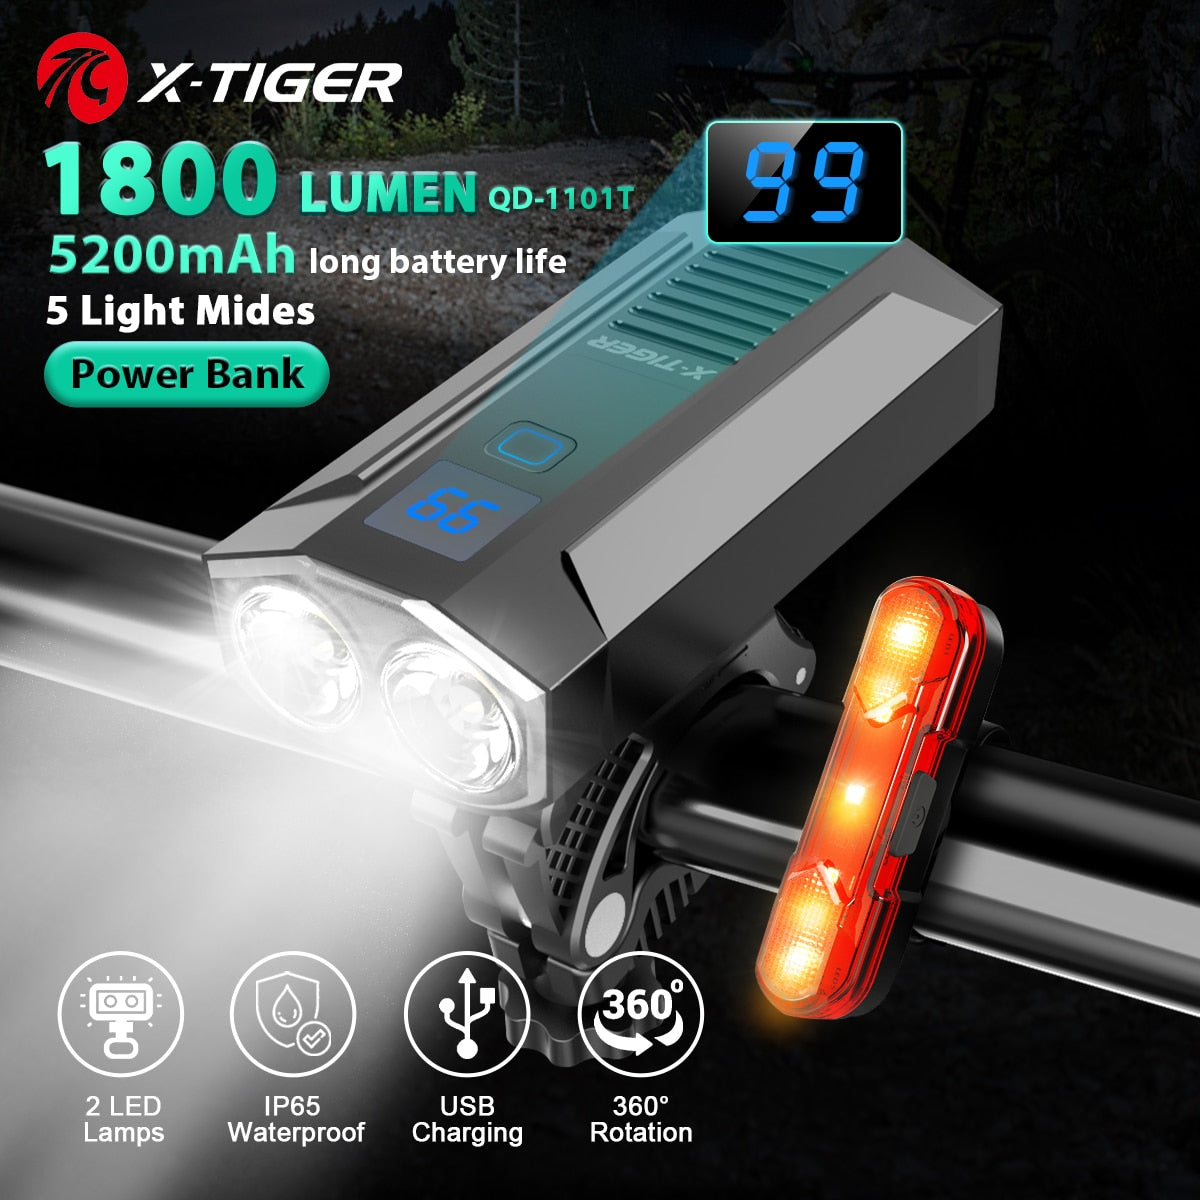 USB Charging Bike Light - Versatile LED Front Lampan BIKE FIELD